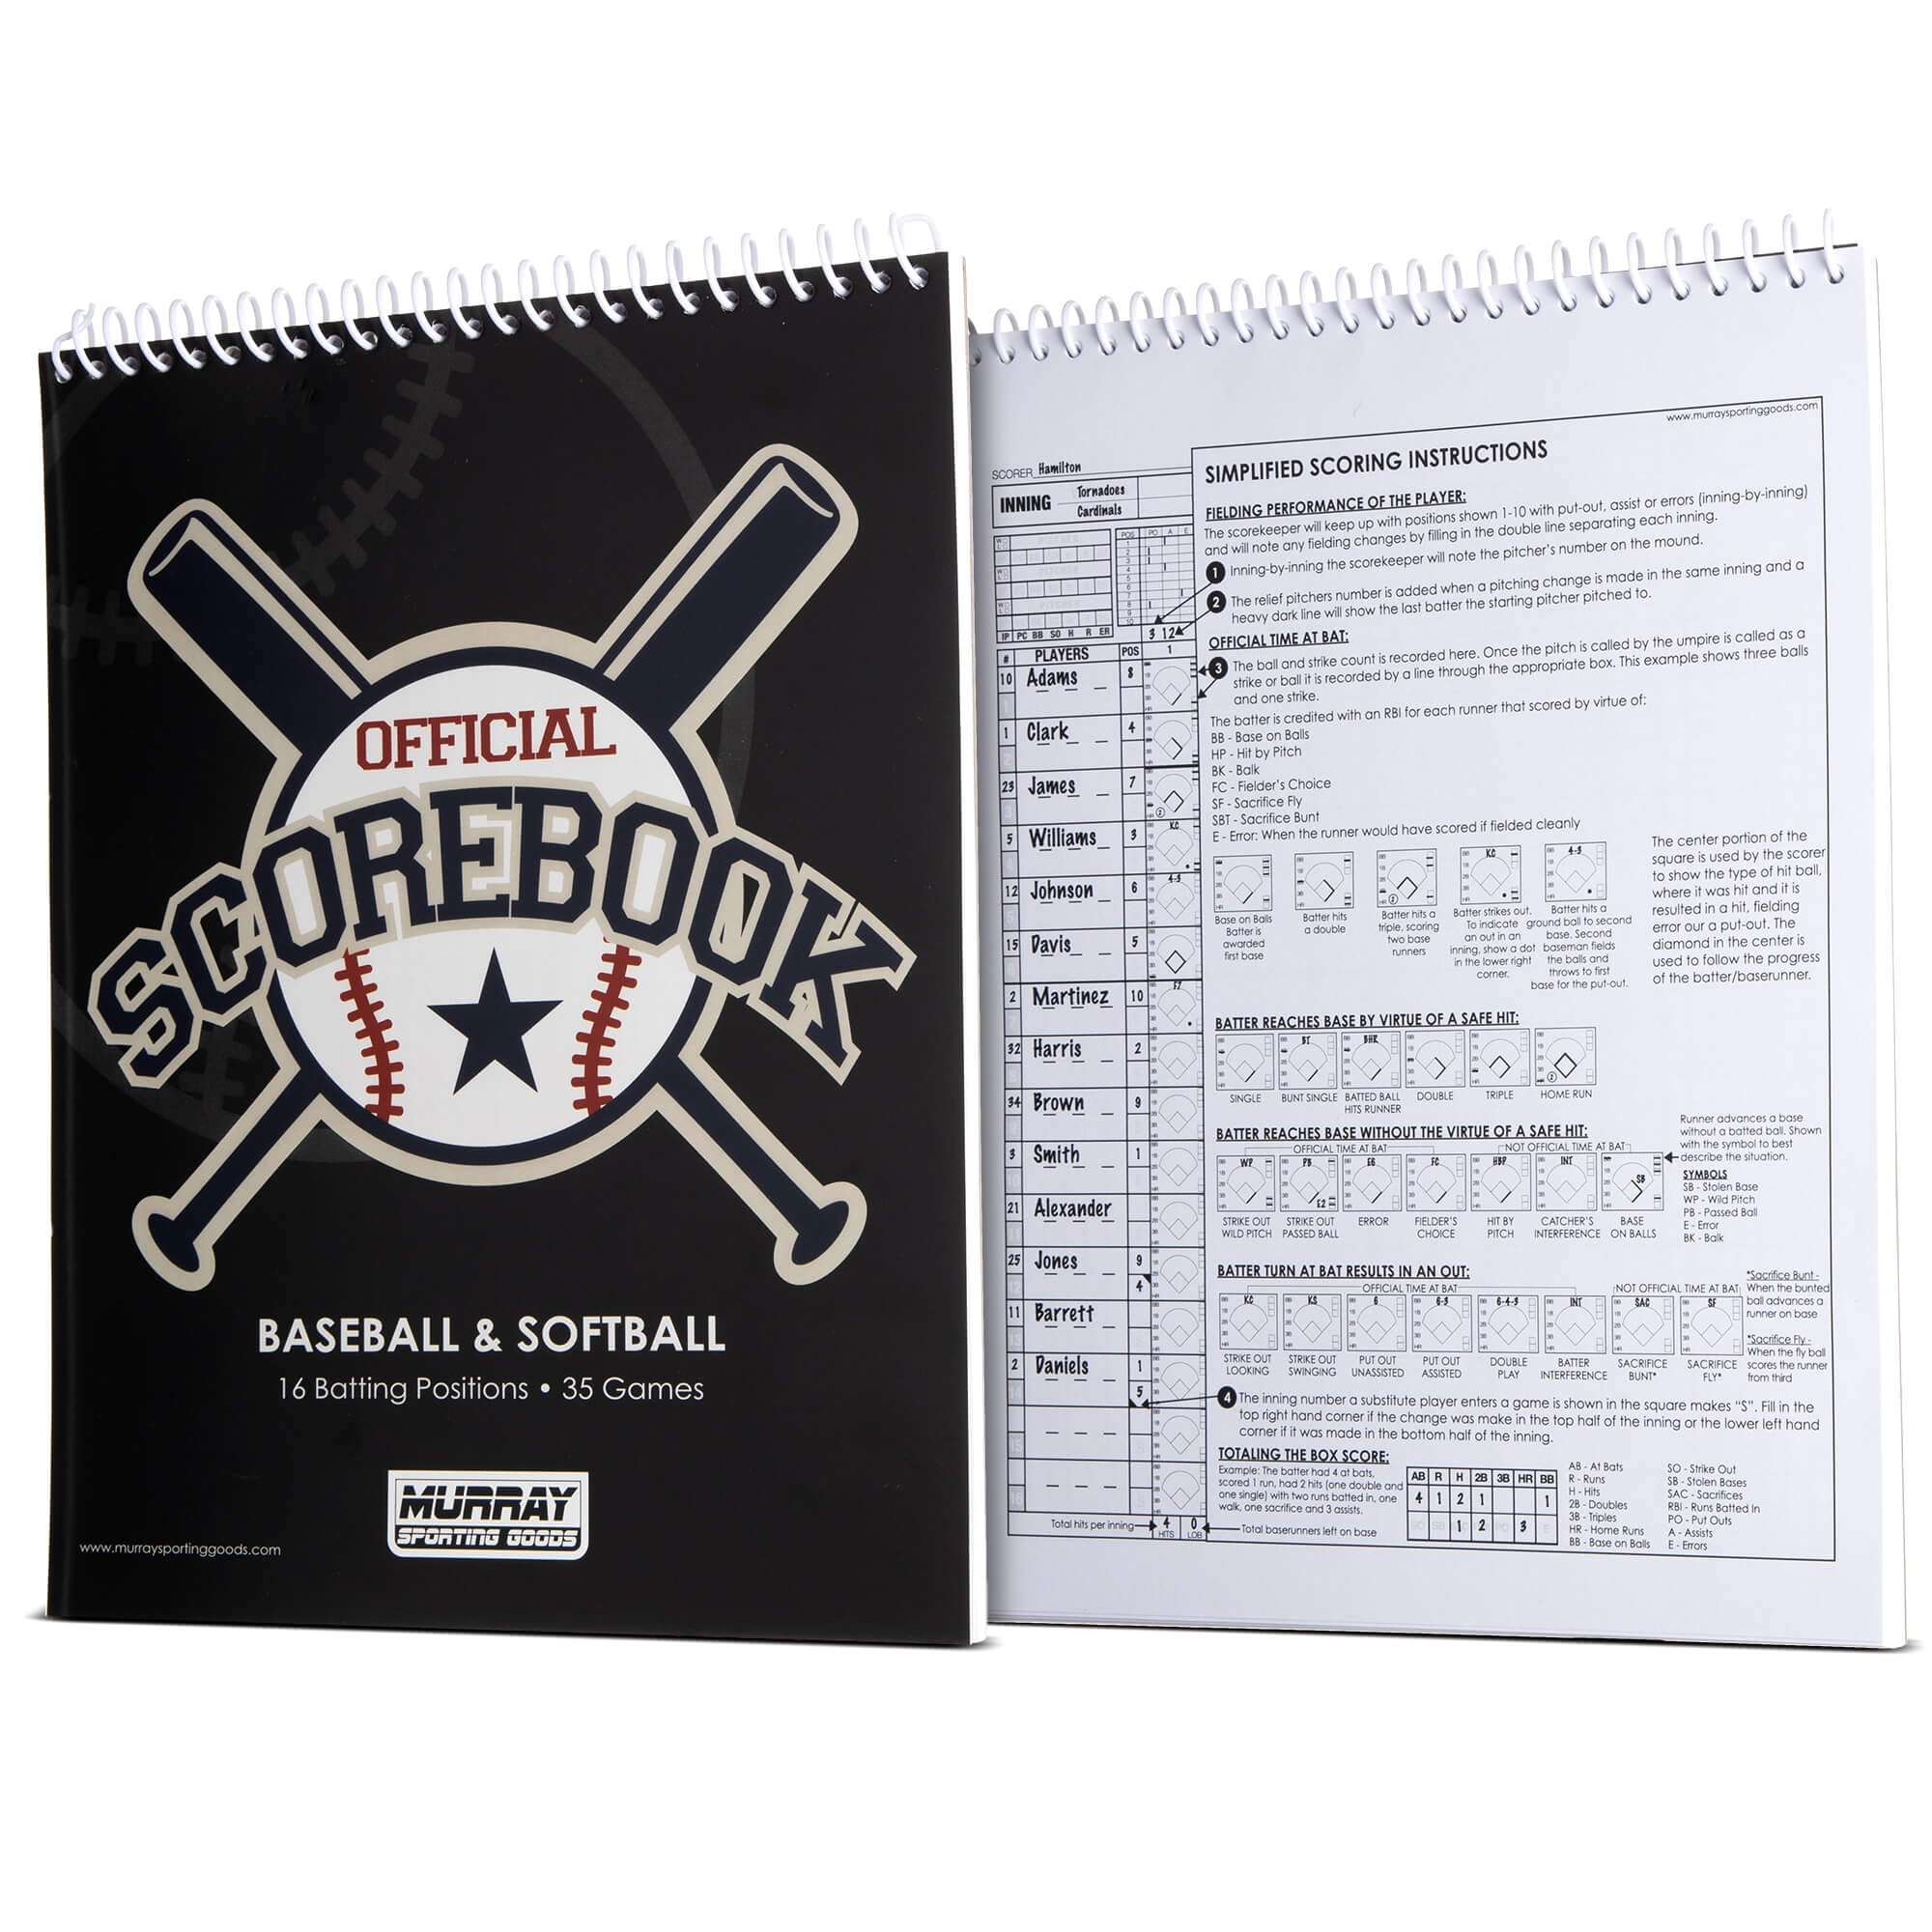 online softball scorebook